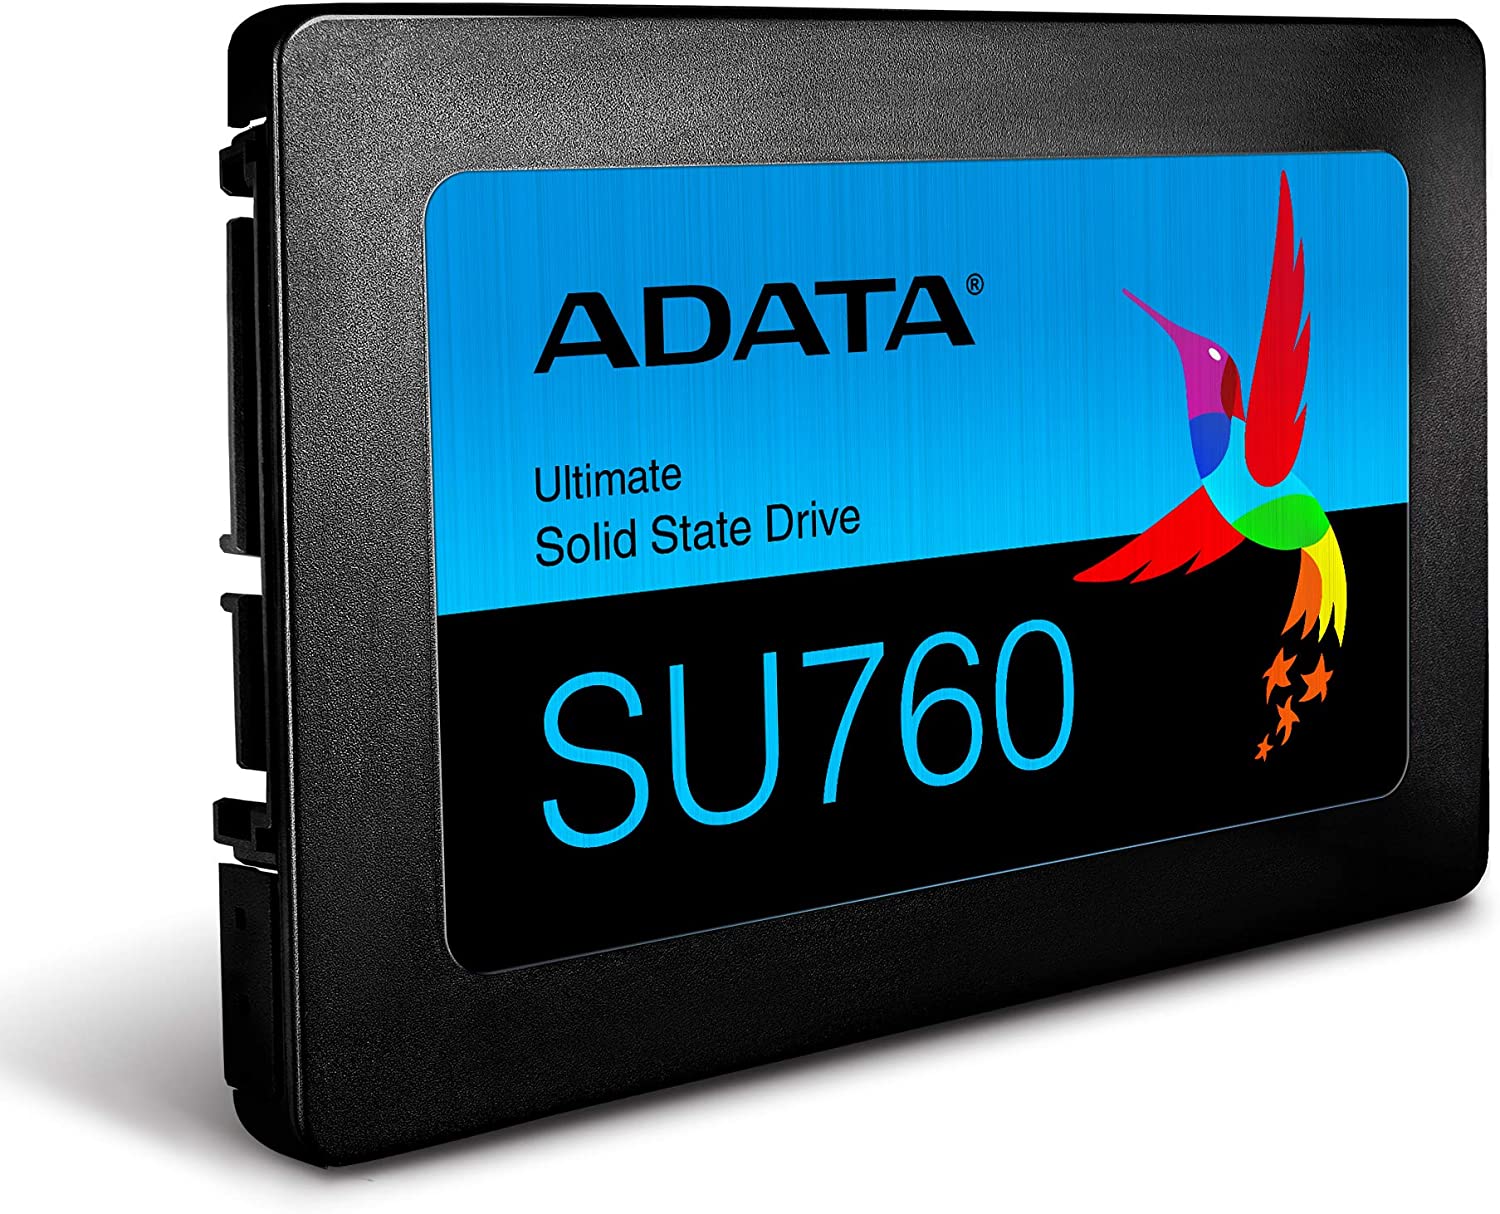 Best DRAM-less SATA SSDs